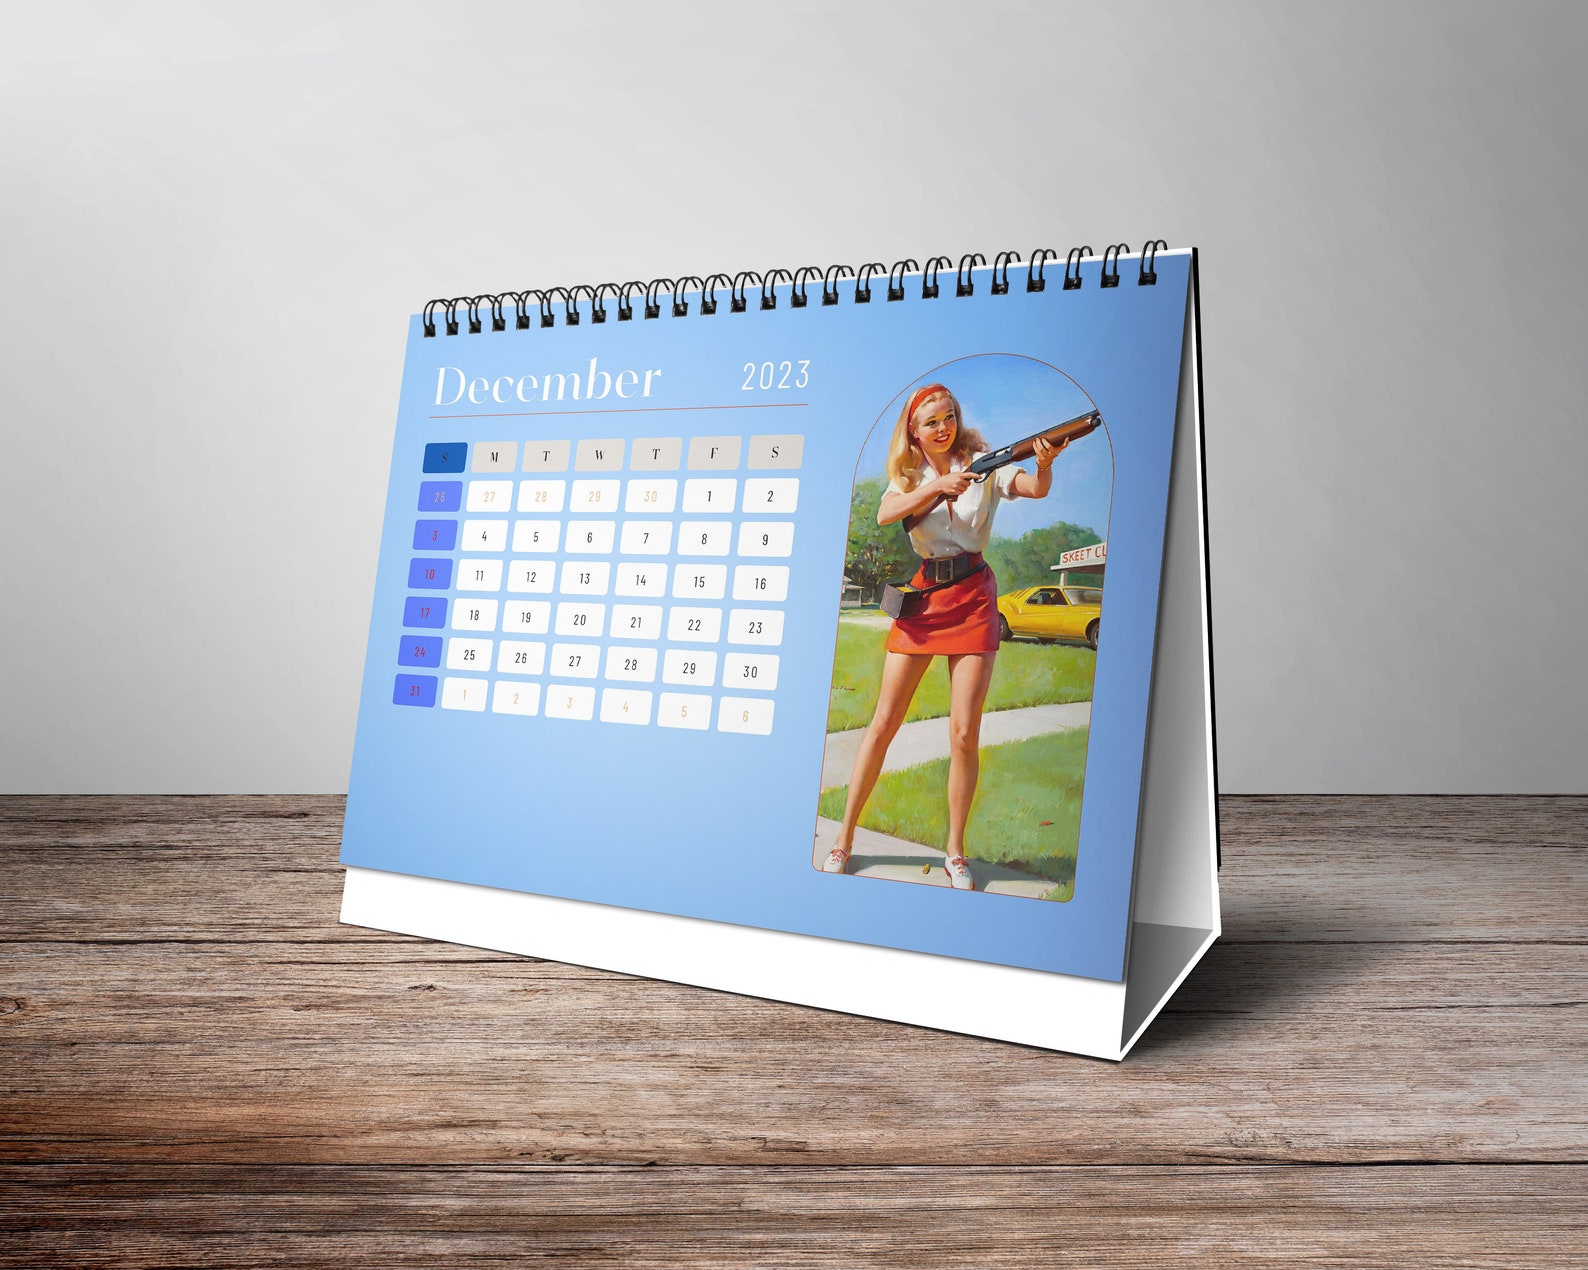 2023-desk-calendar-pin-up-girl-calendar-erotic-calendar-etsy